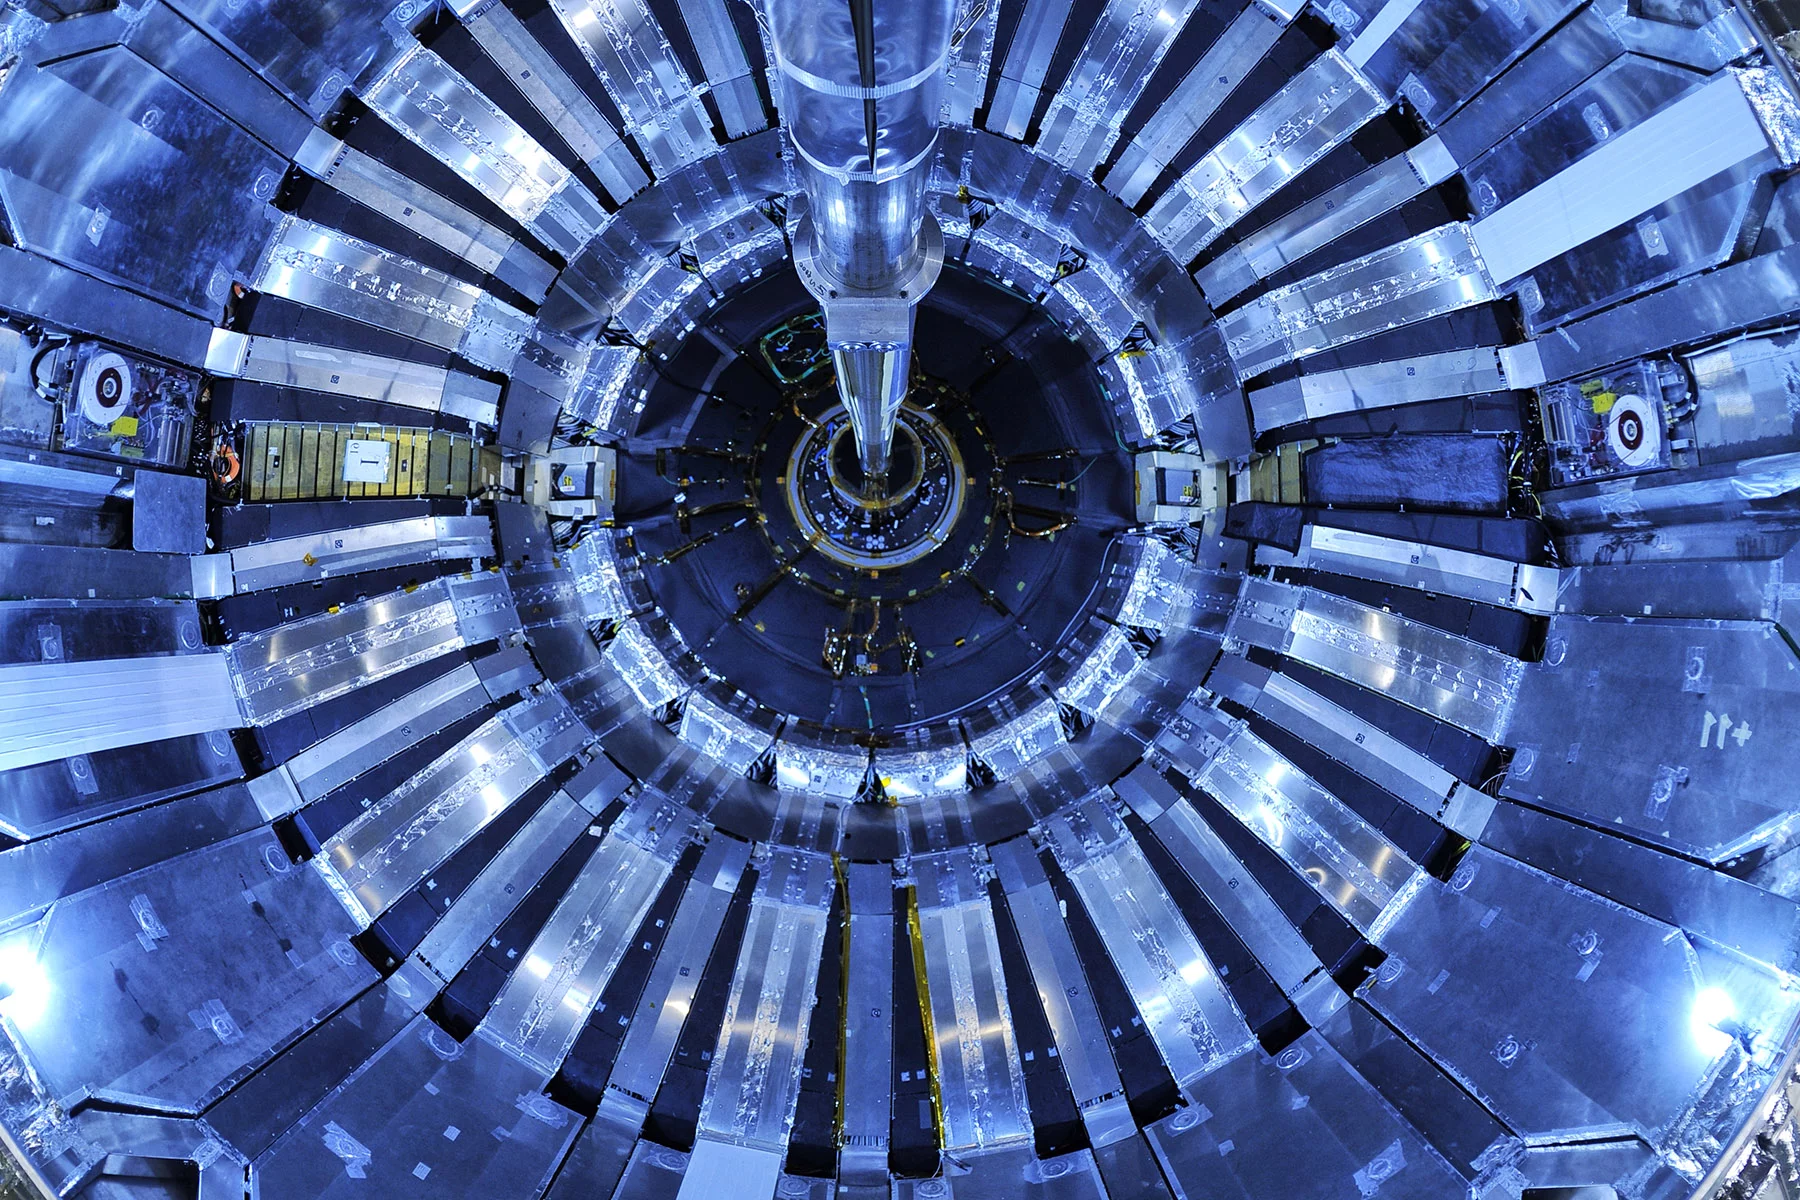 The Large Hadron Collider at CERN in Meyrin, Switzerland